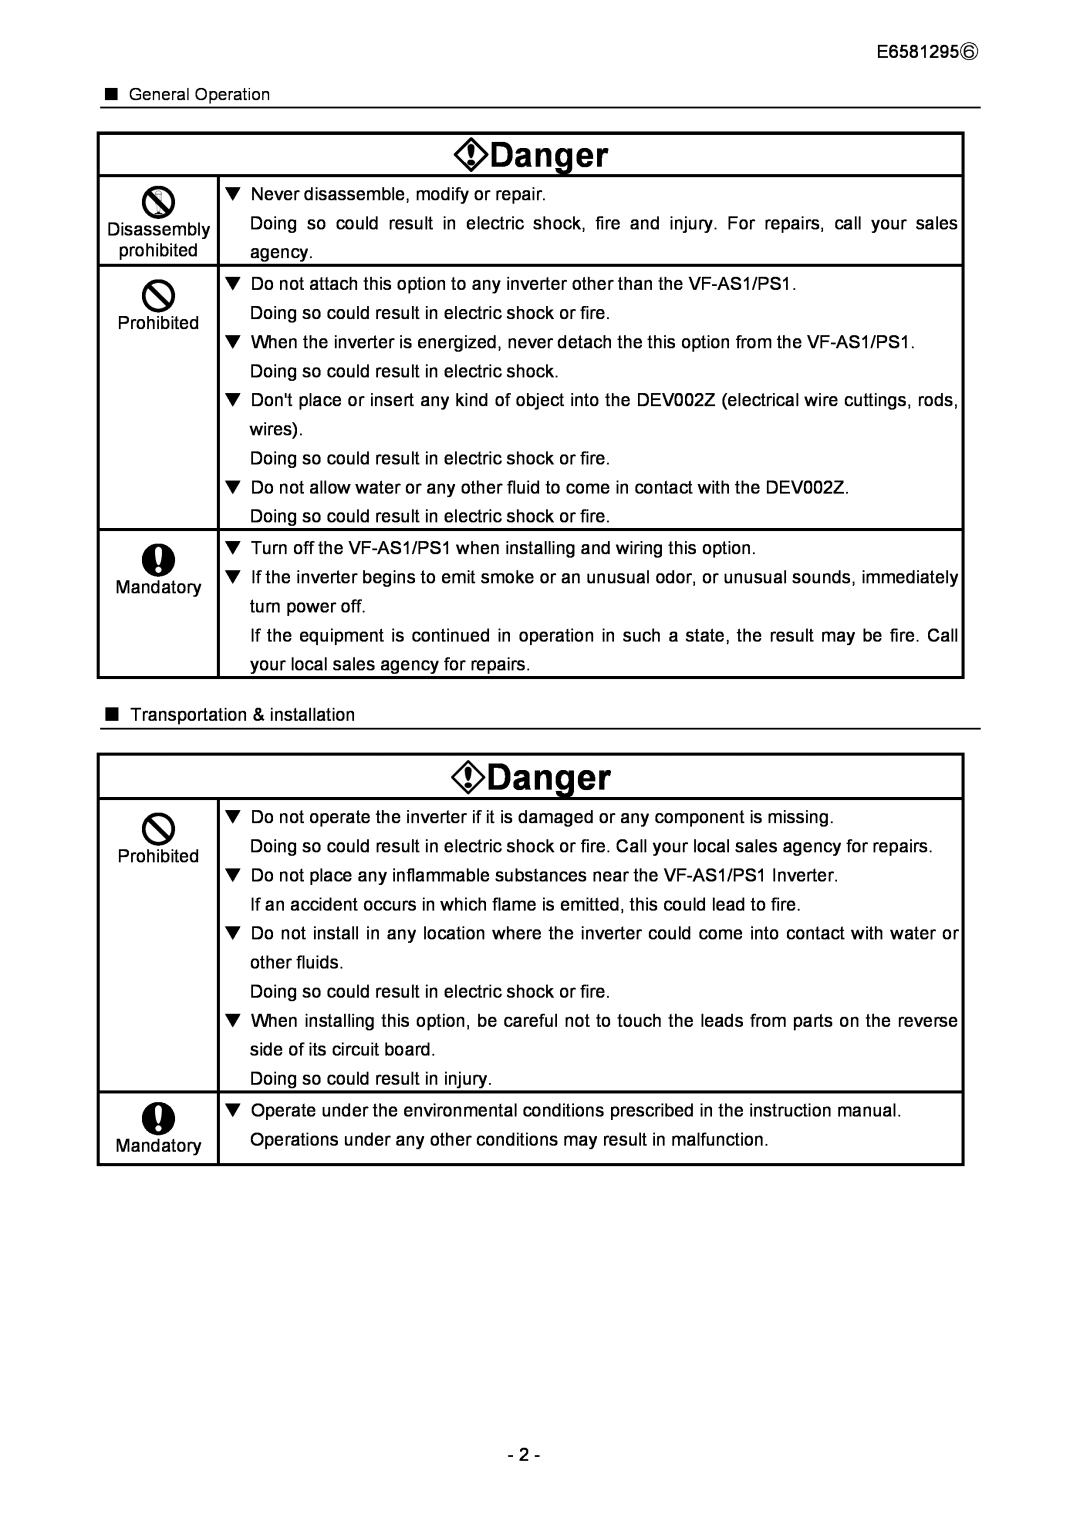 Toshiba DEV002Z instruction manual Danger 